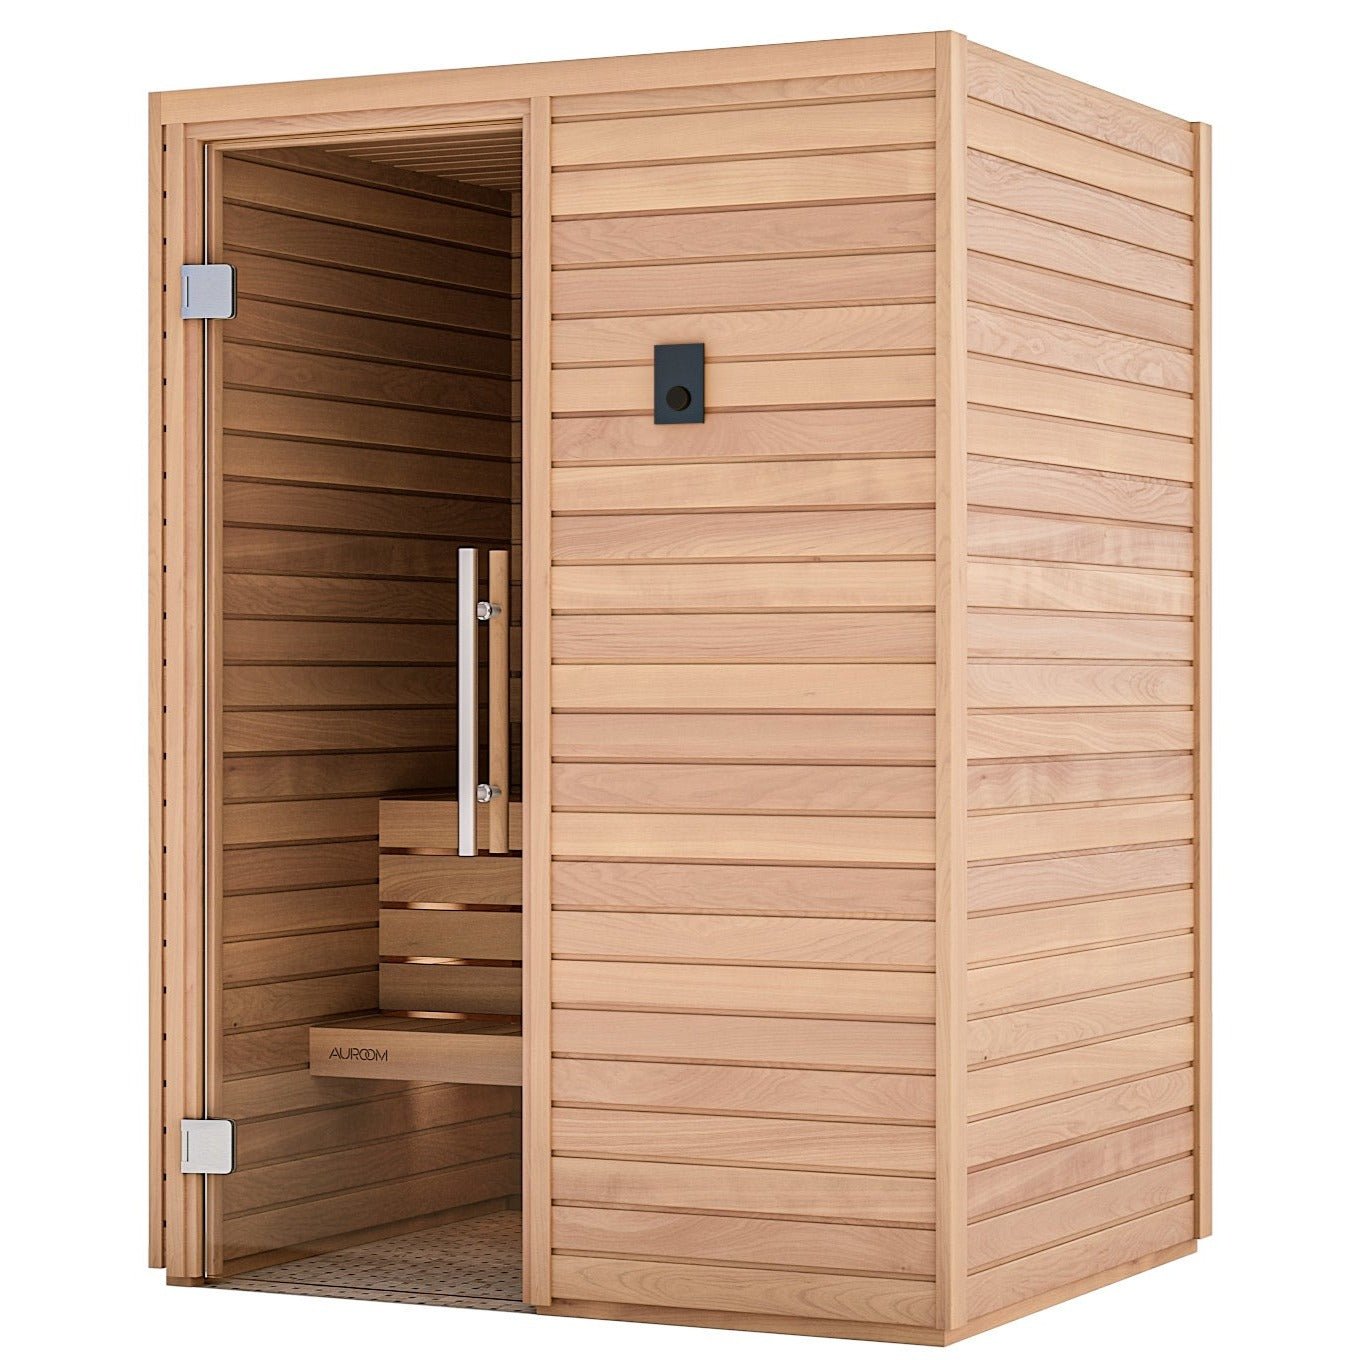 auroom-cala-wood-3-person-indoor-cabin-sauna-kit-thermo-aspen